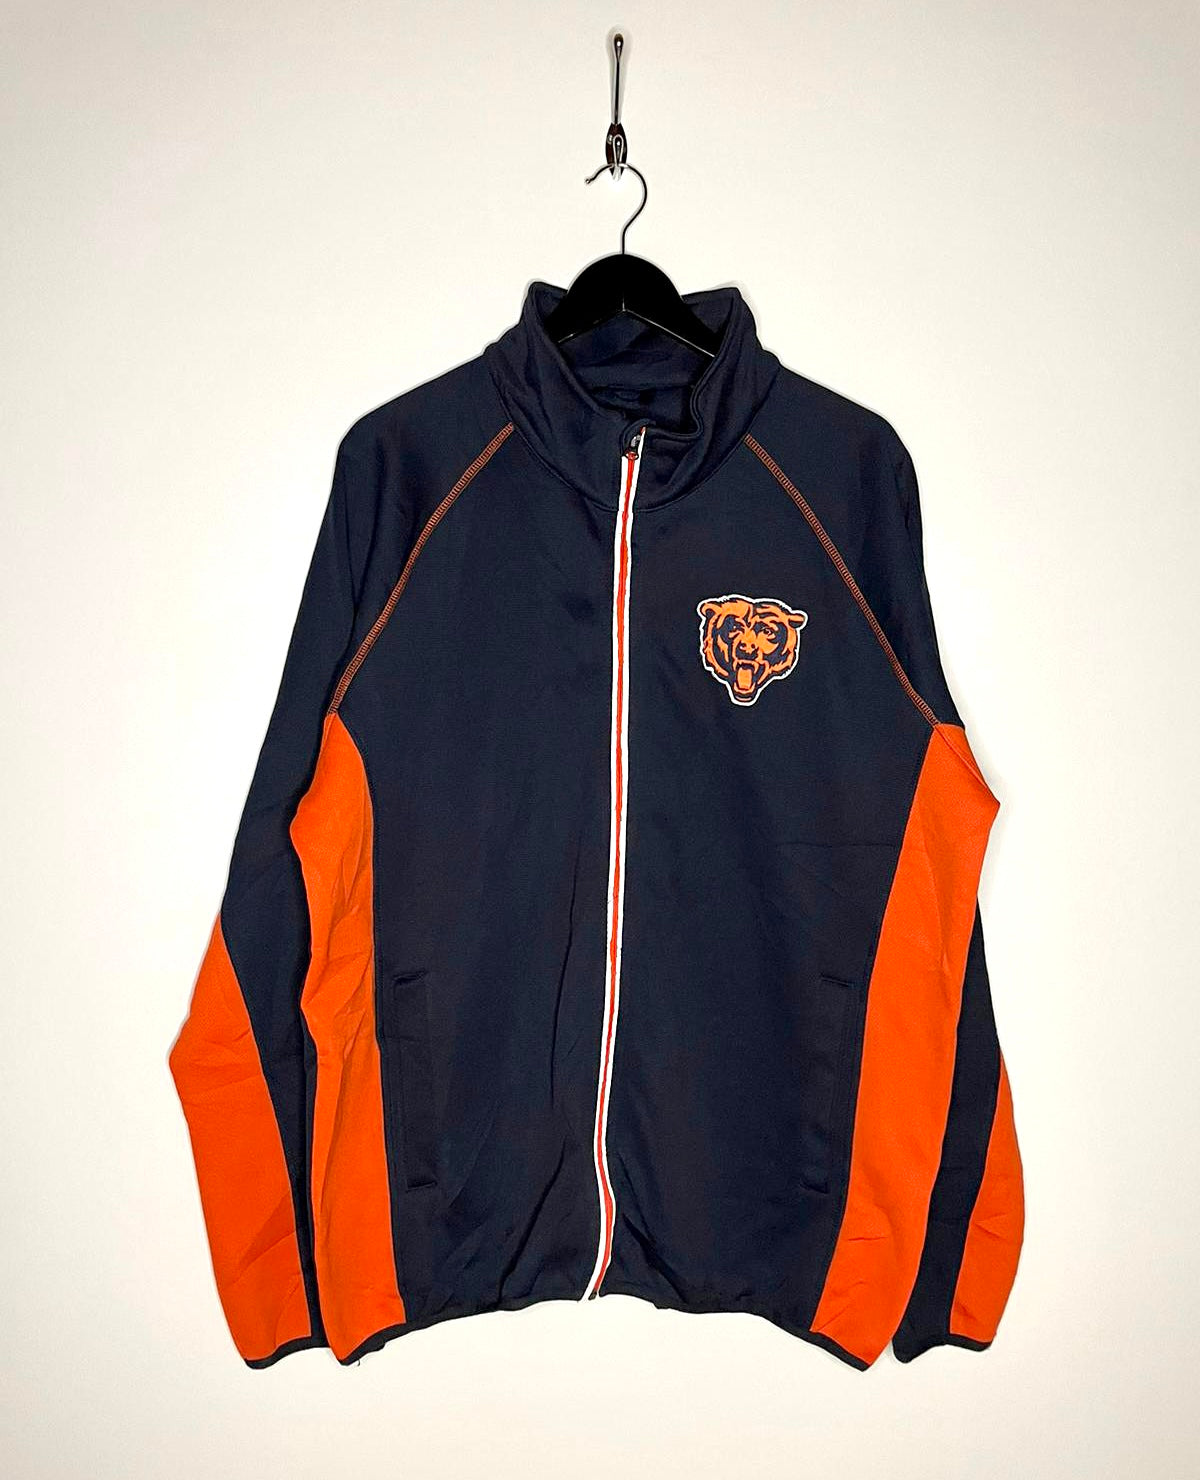 NFL Chicago Bears track jacket size XL 